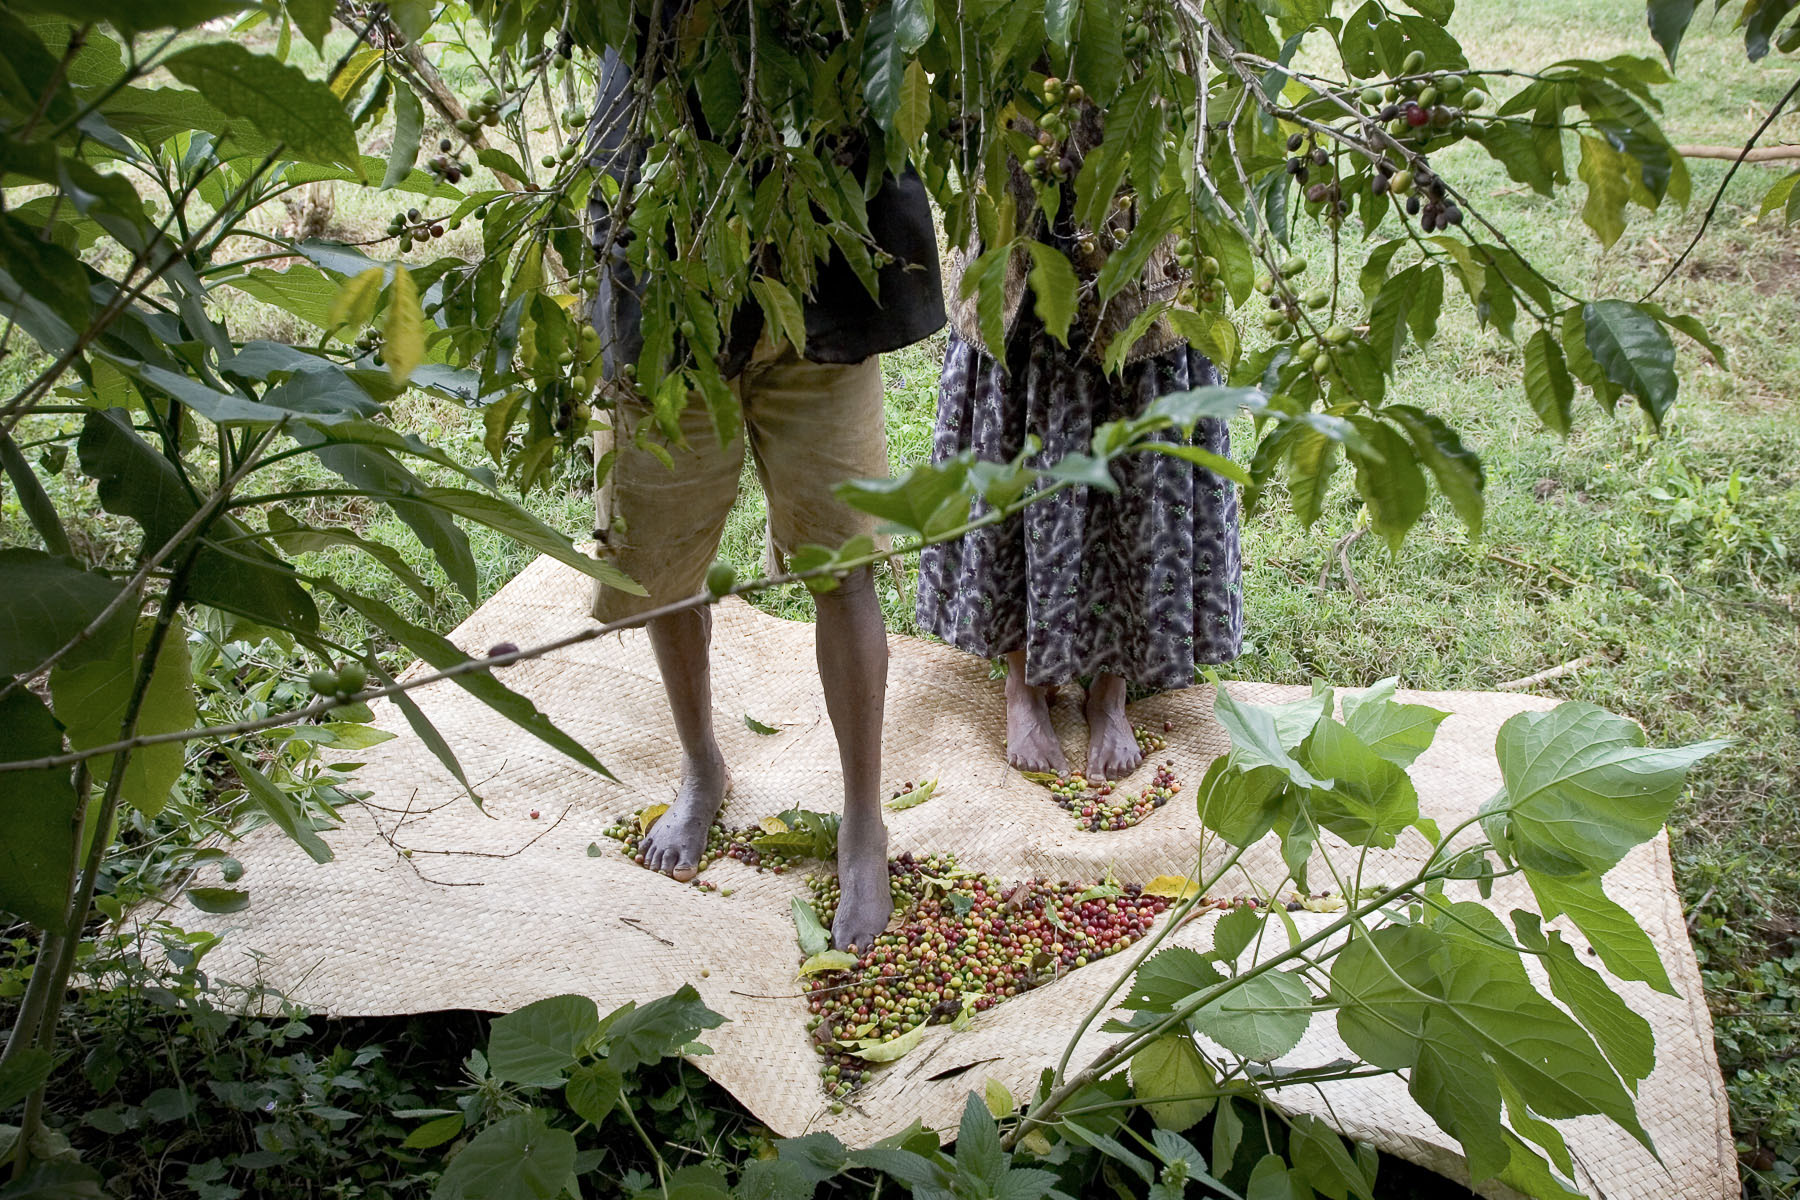 Bonga, the homeland of coffee. Coffee bean harvest at Cheik Mohamed’s in November 2004